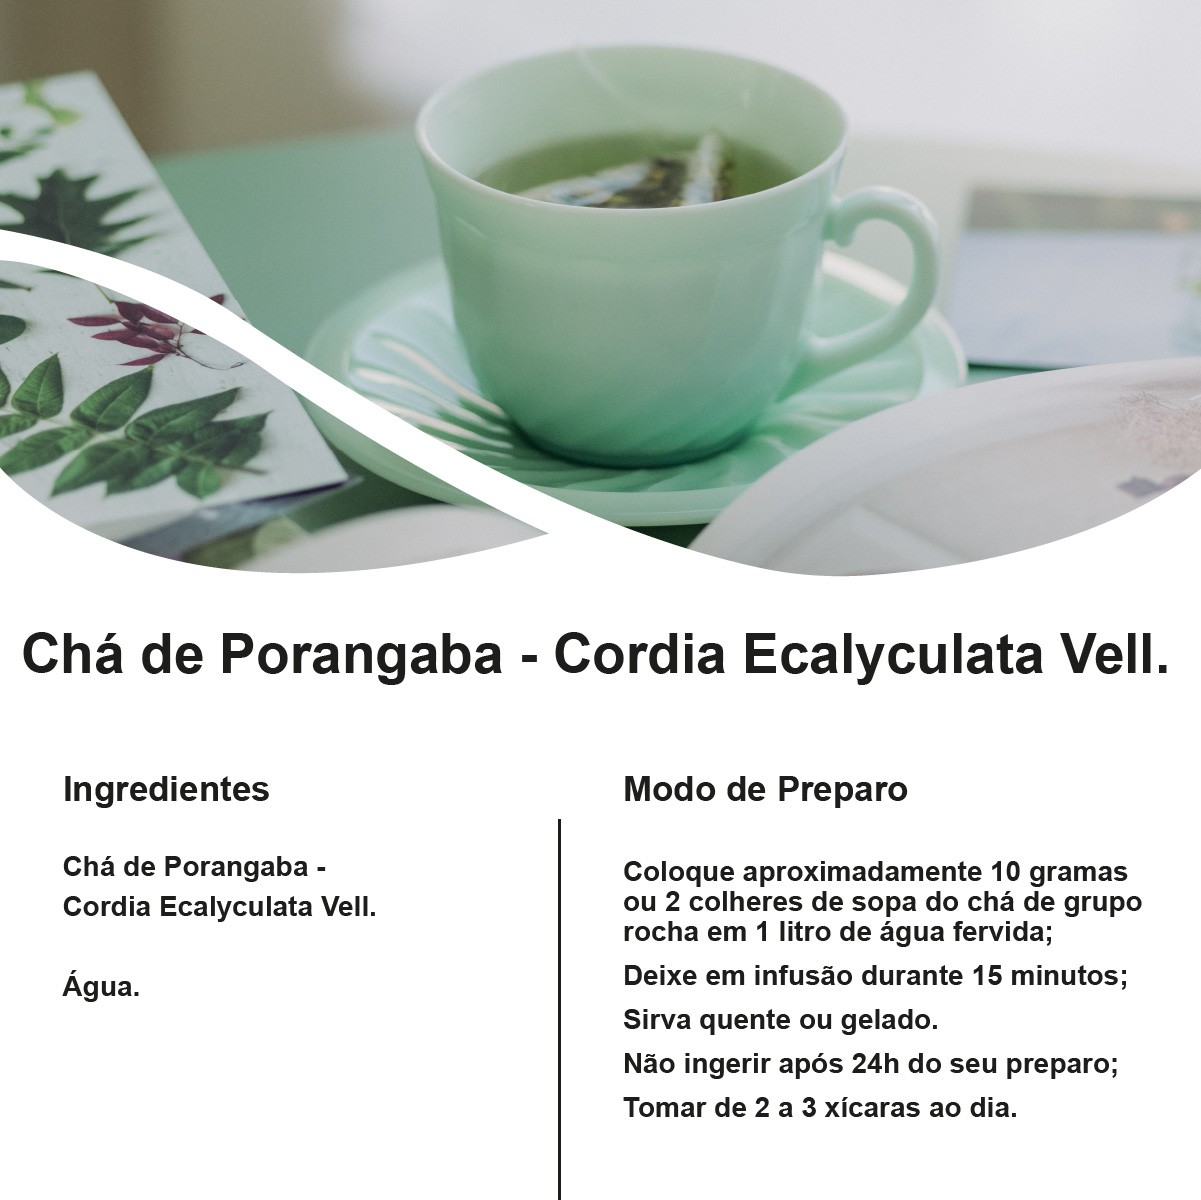 Chá de Porangaba - Cordia ecalyculata Vell. - 100g